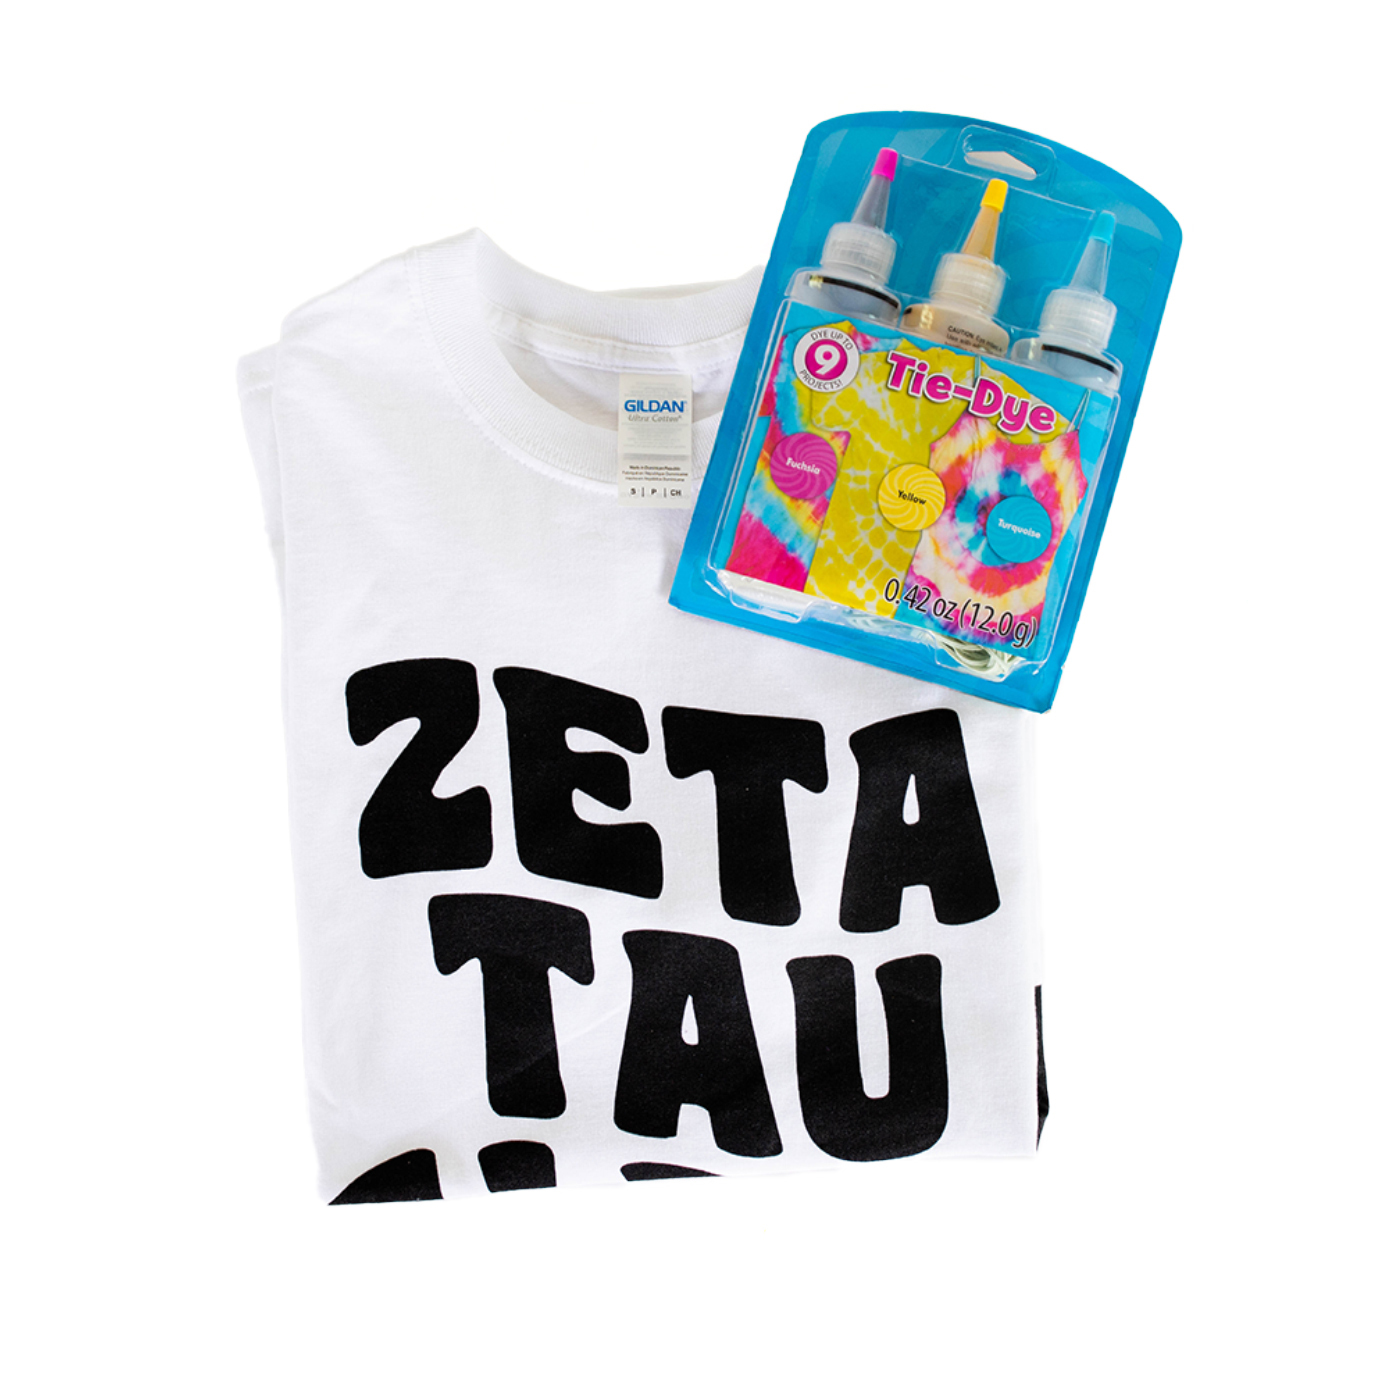 Zeta Tau Alpha Tie Dye Tee Kit